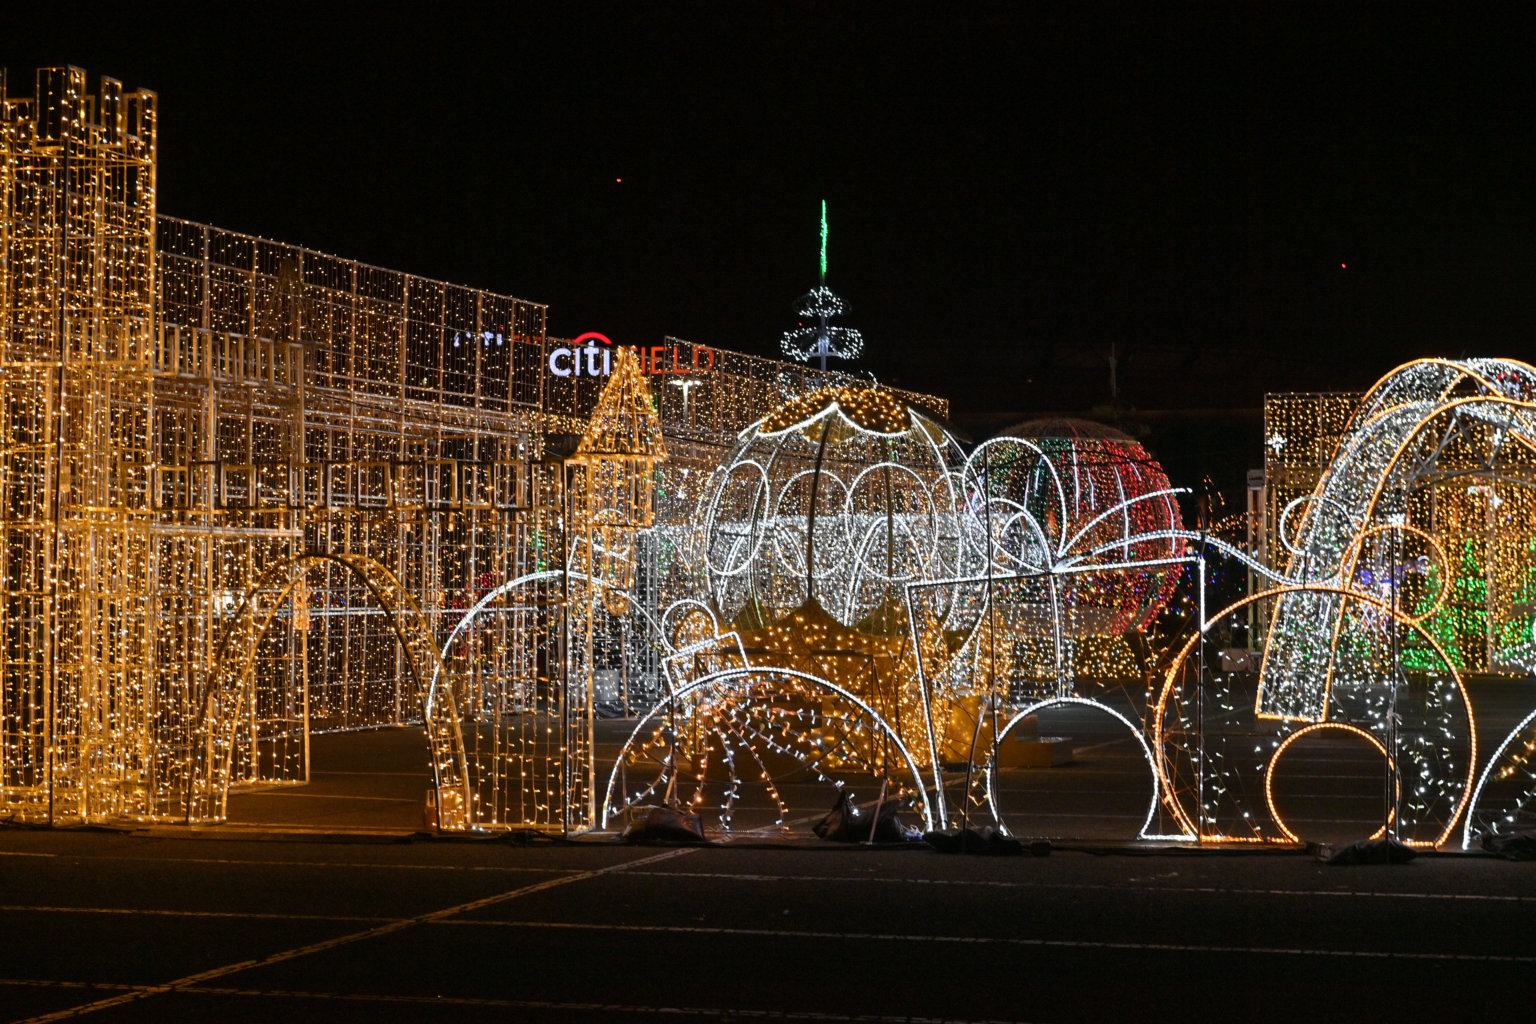 Amaze Light Festival brings dazzling display to Citi Field